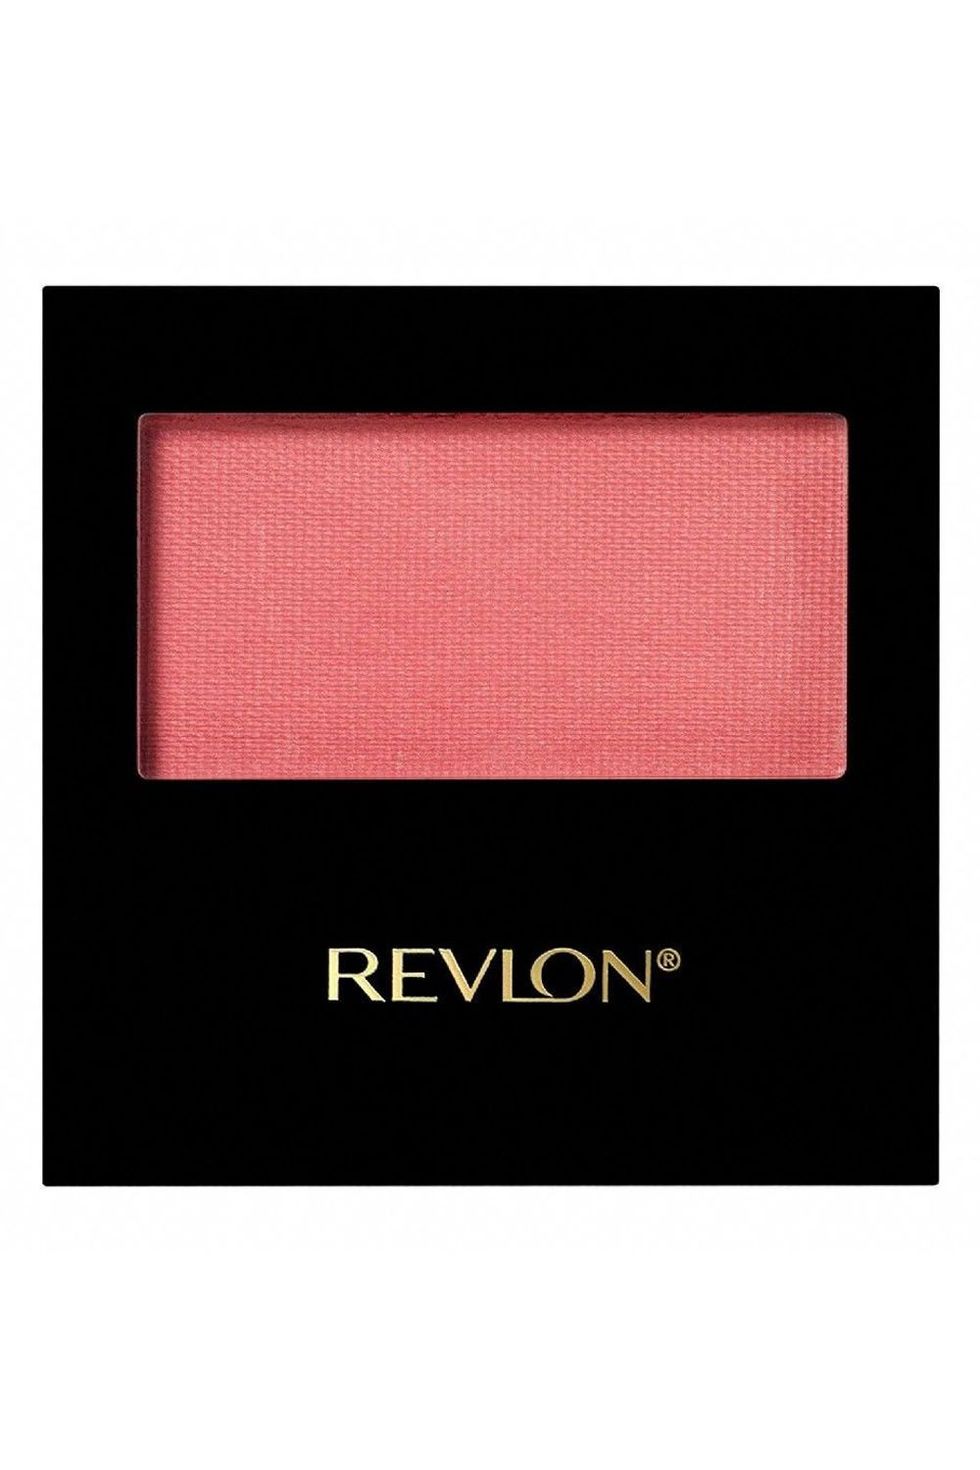 Revlon Powder Blush in Mauvelous